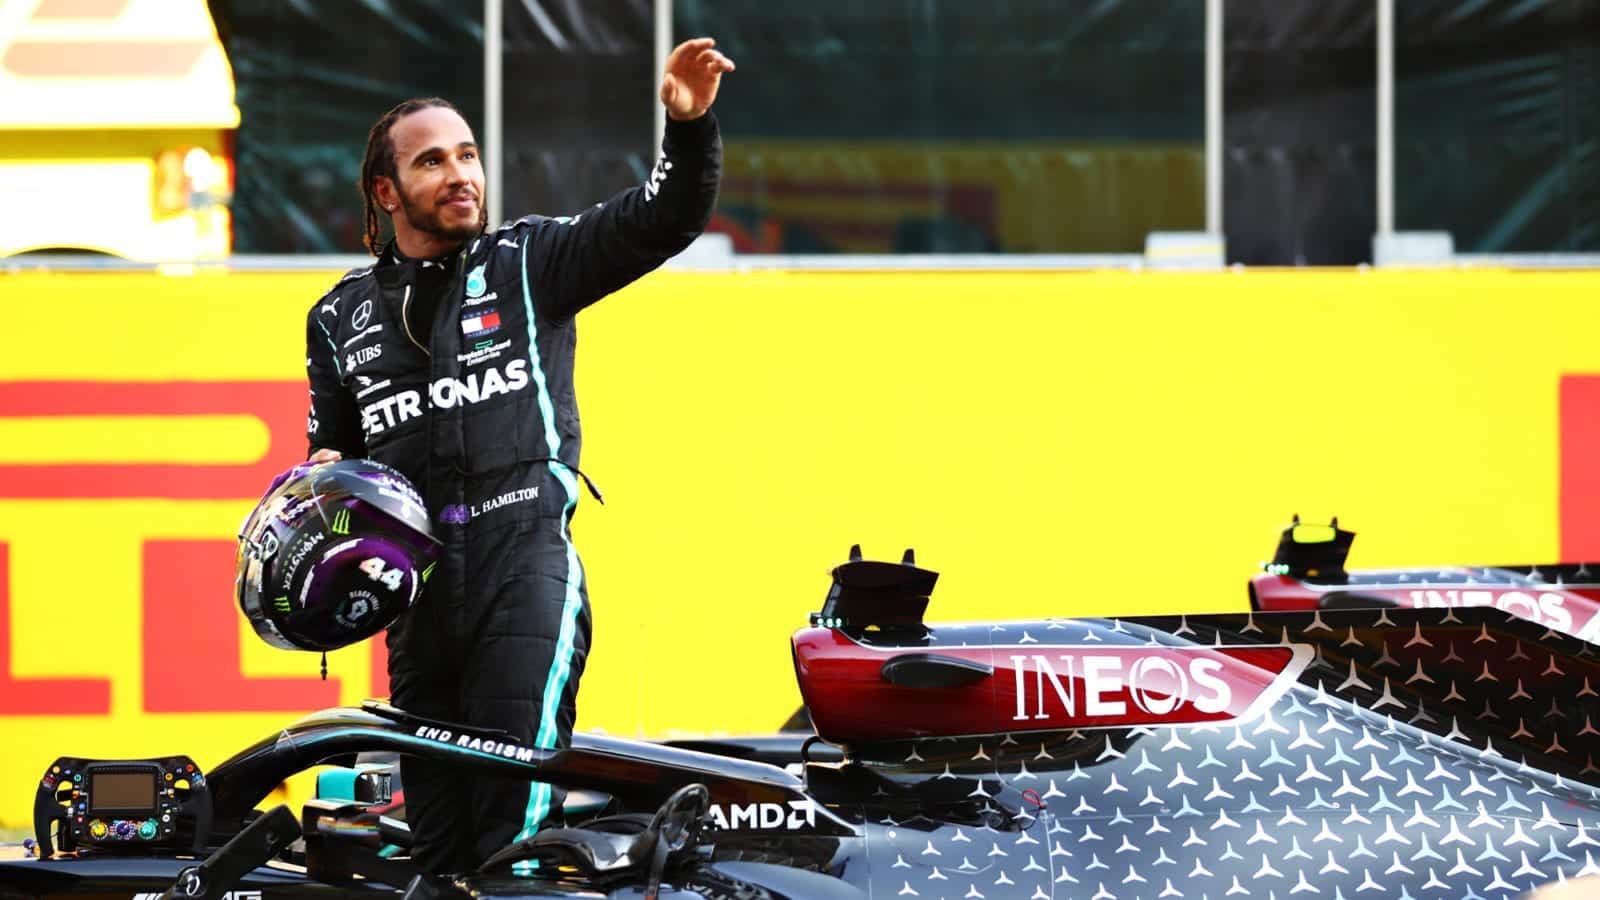 Lewis Hamilton raises his arm after winning the 2020 Tuscan Grand Prix at Mugello